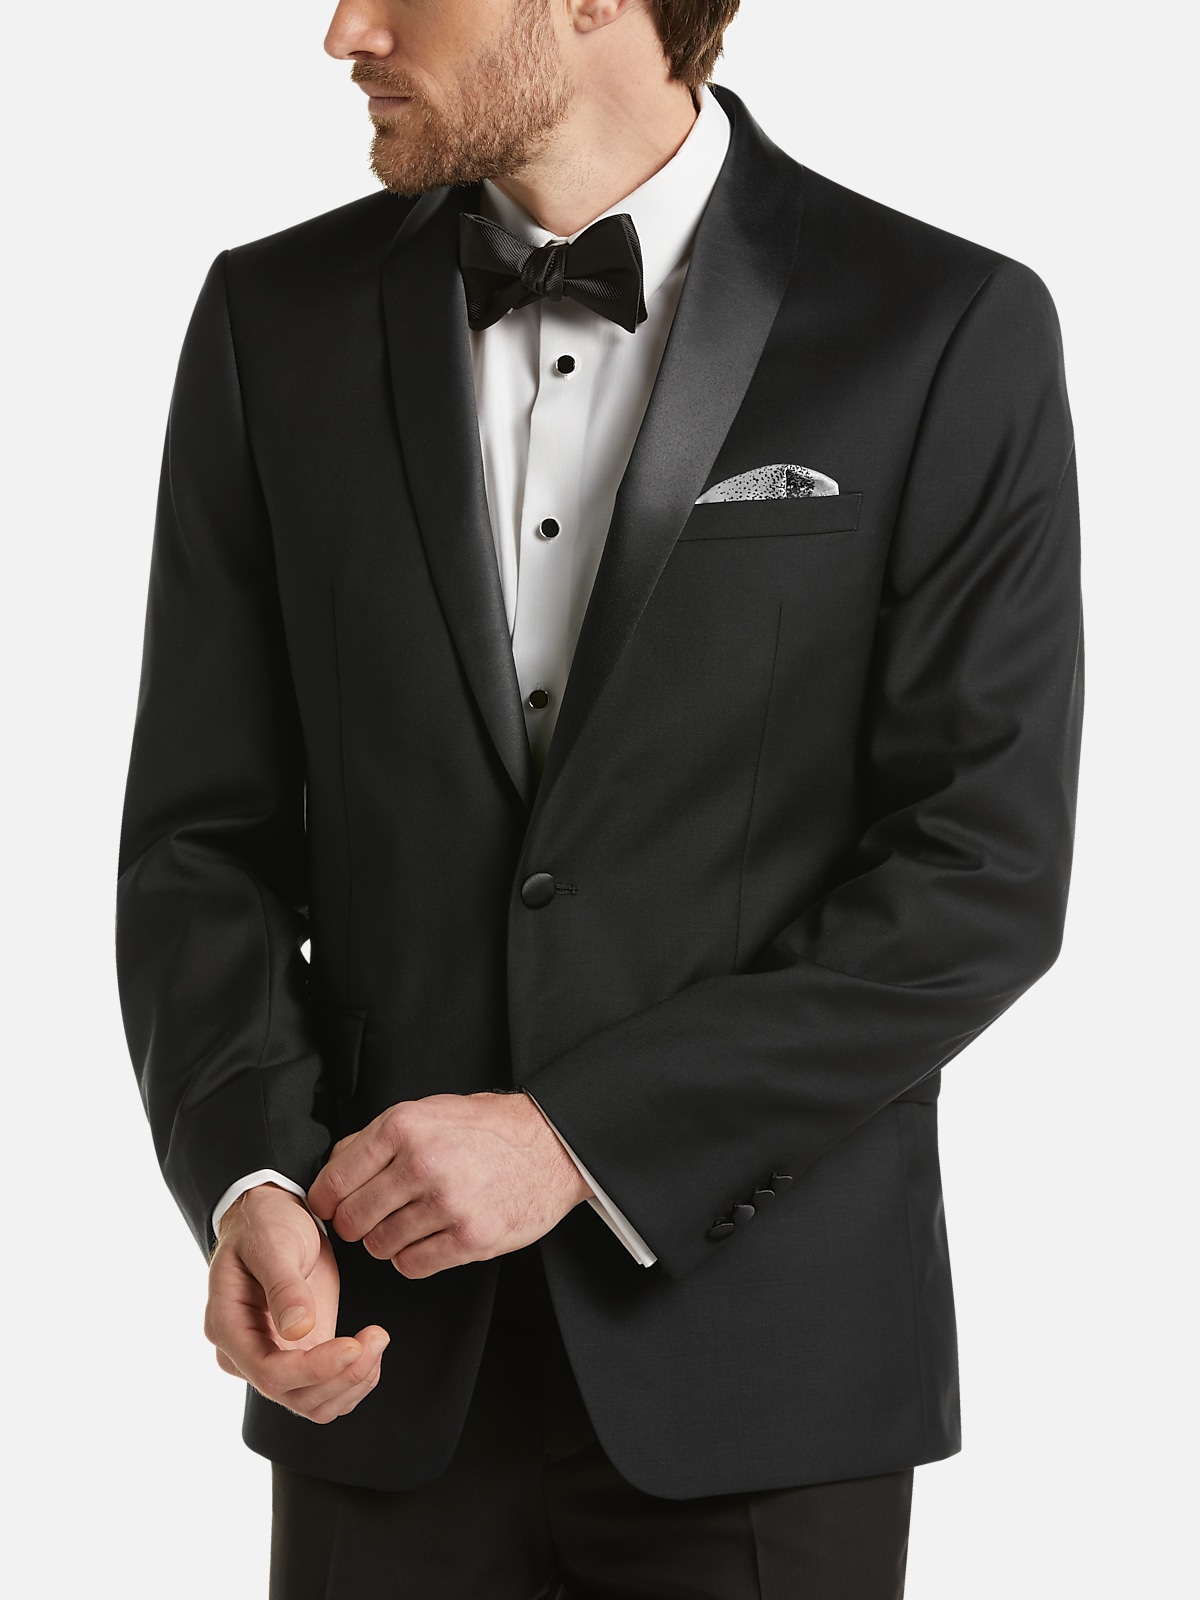 Calvin Klein Slim Fit Shawl Lapel Tuxedo Jacket | All Clearance $39.99 ...